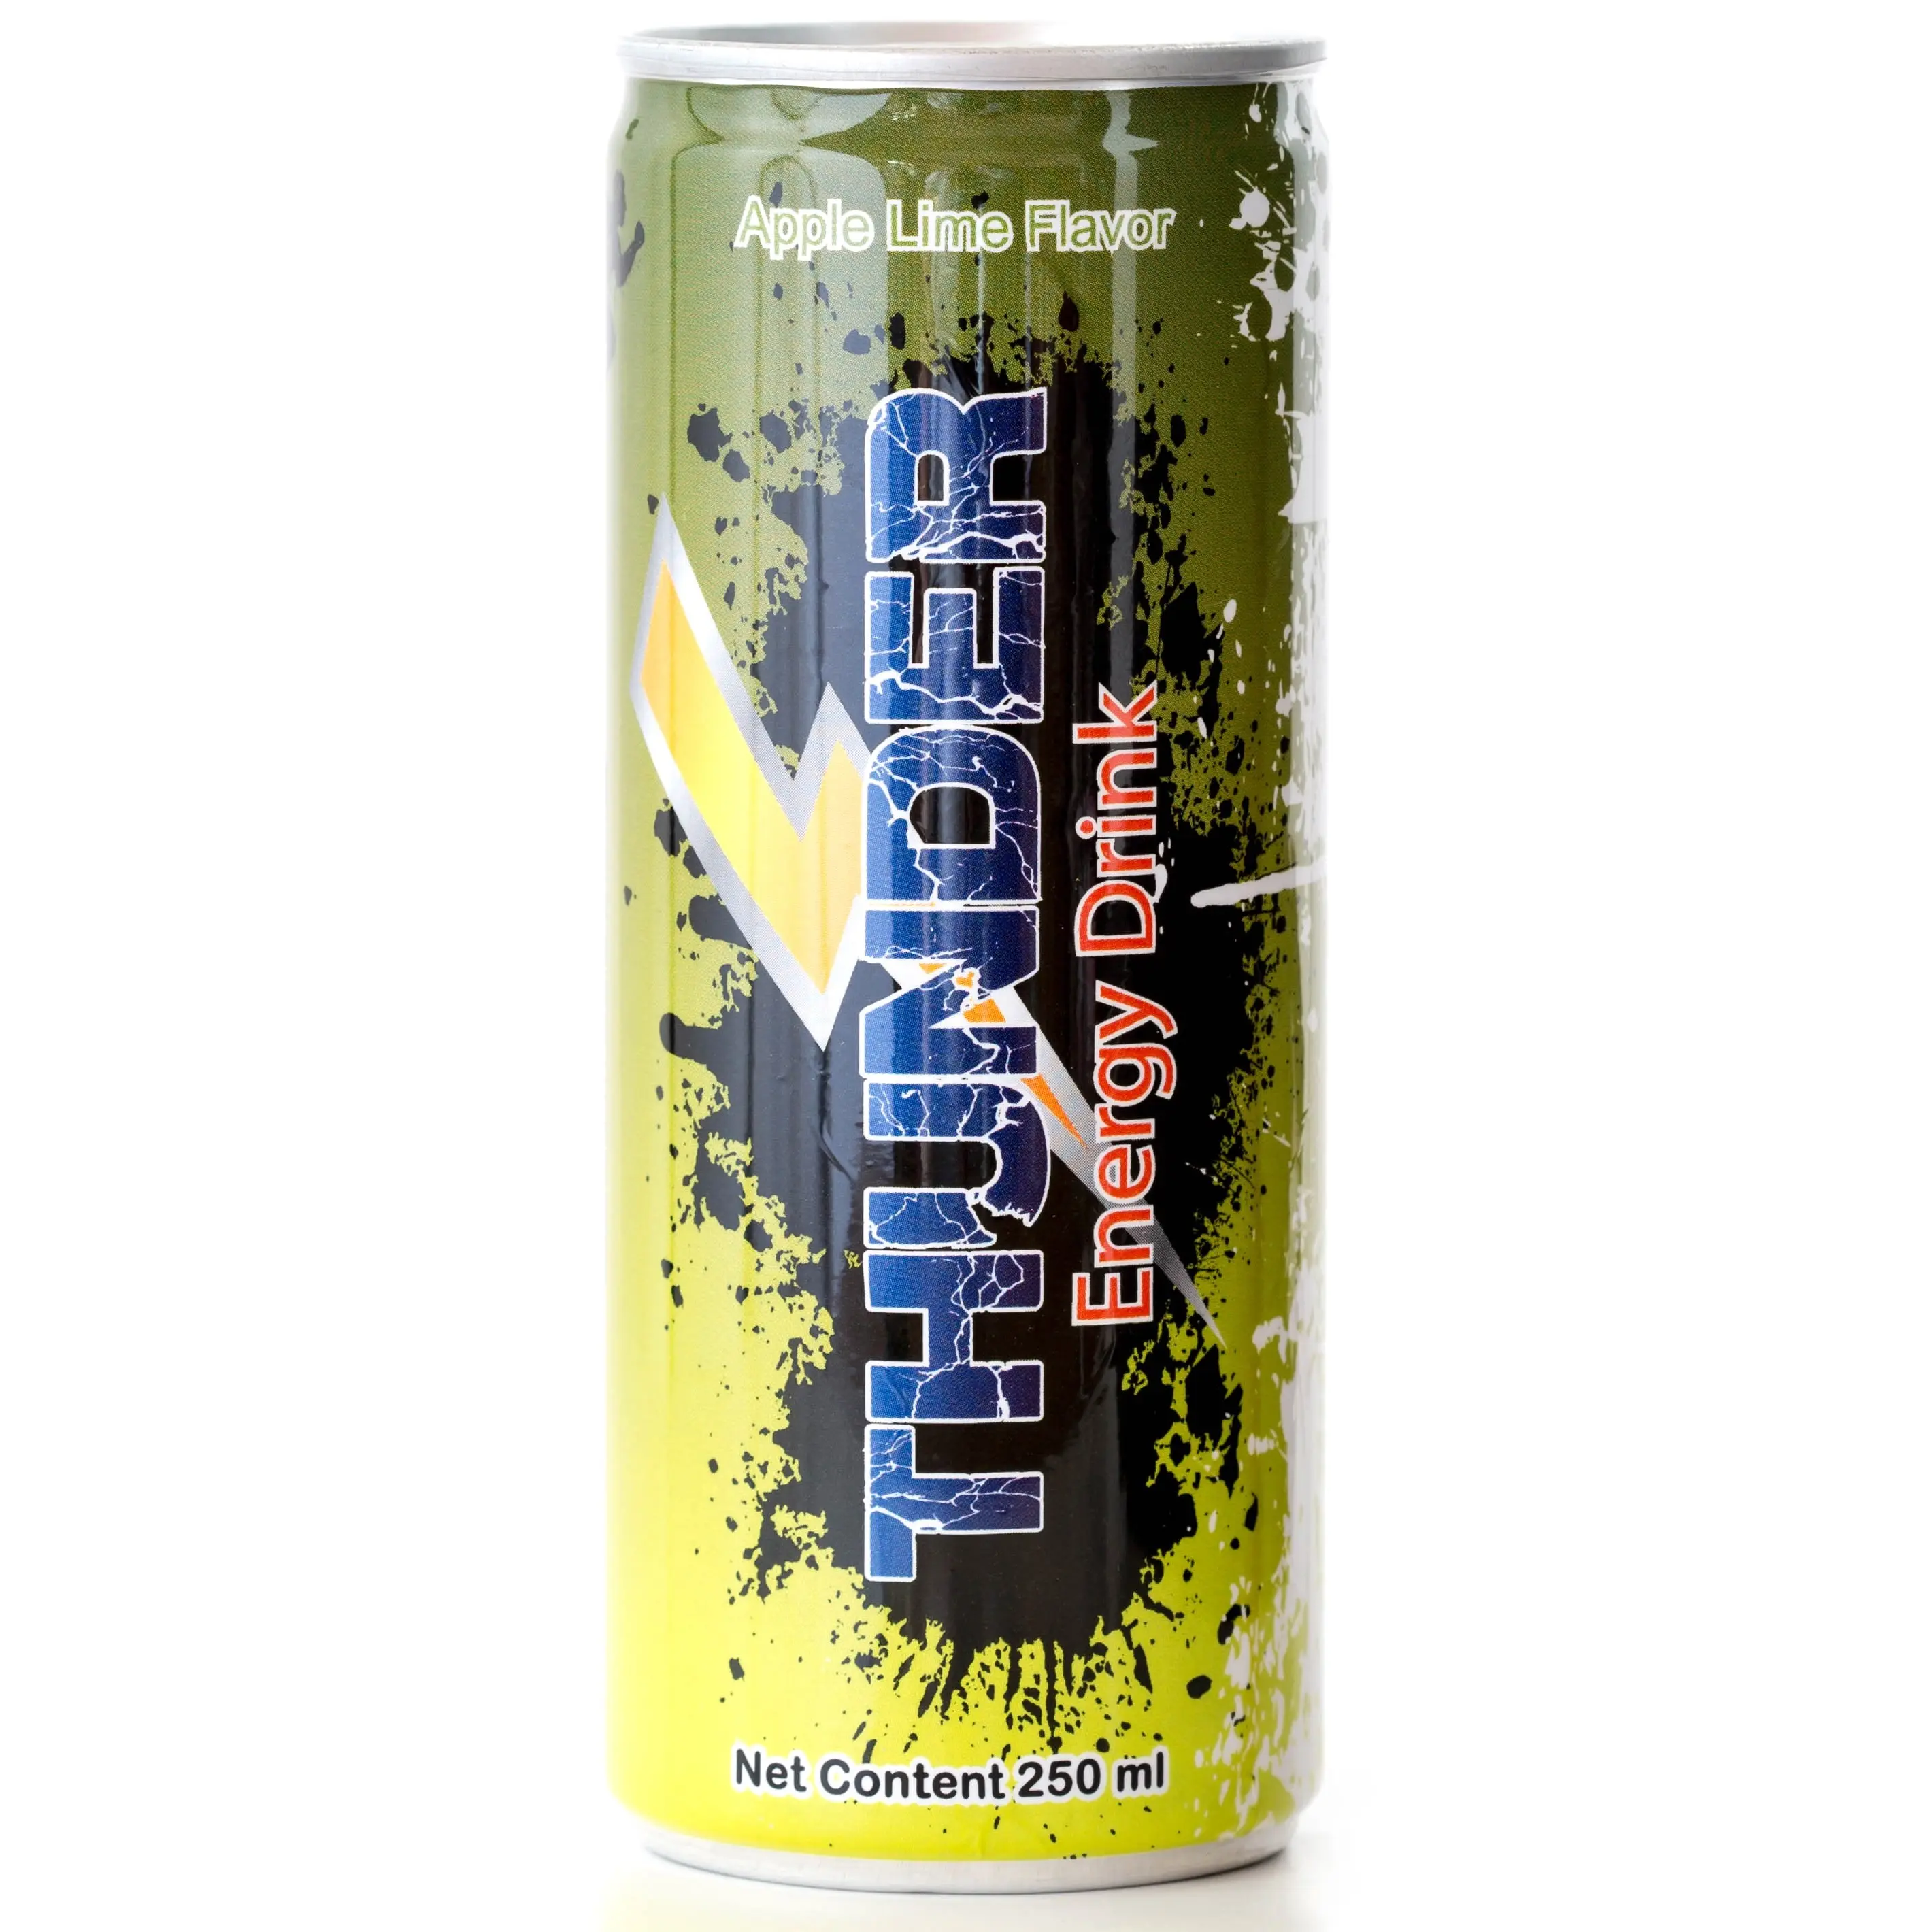 Thunder Энергетик. Энергетик из Тайланда. Пиво Lime flavor китайское.